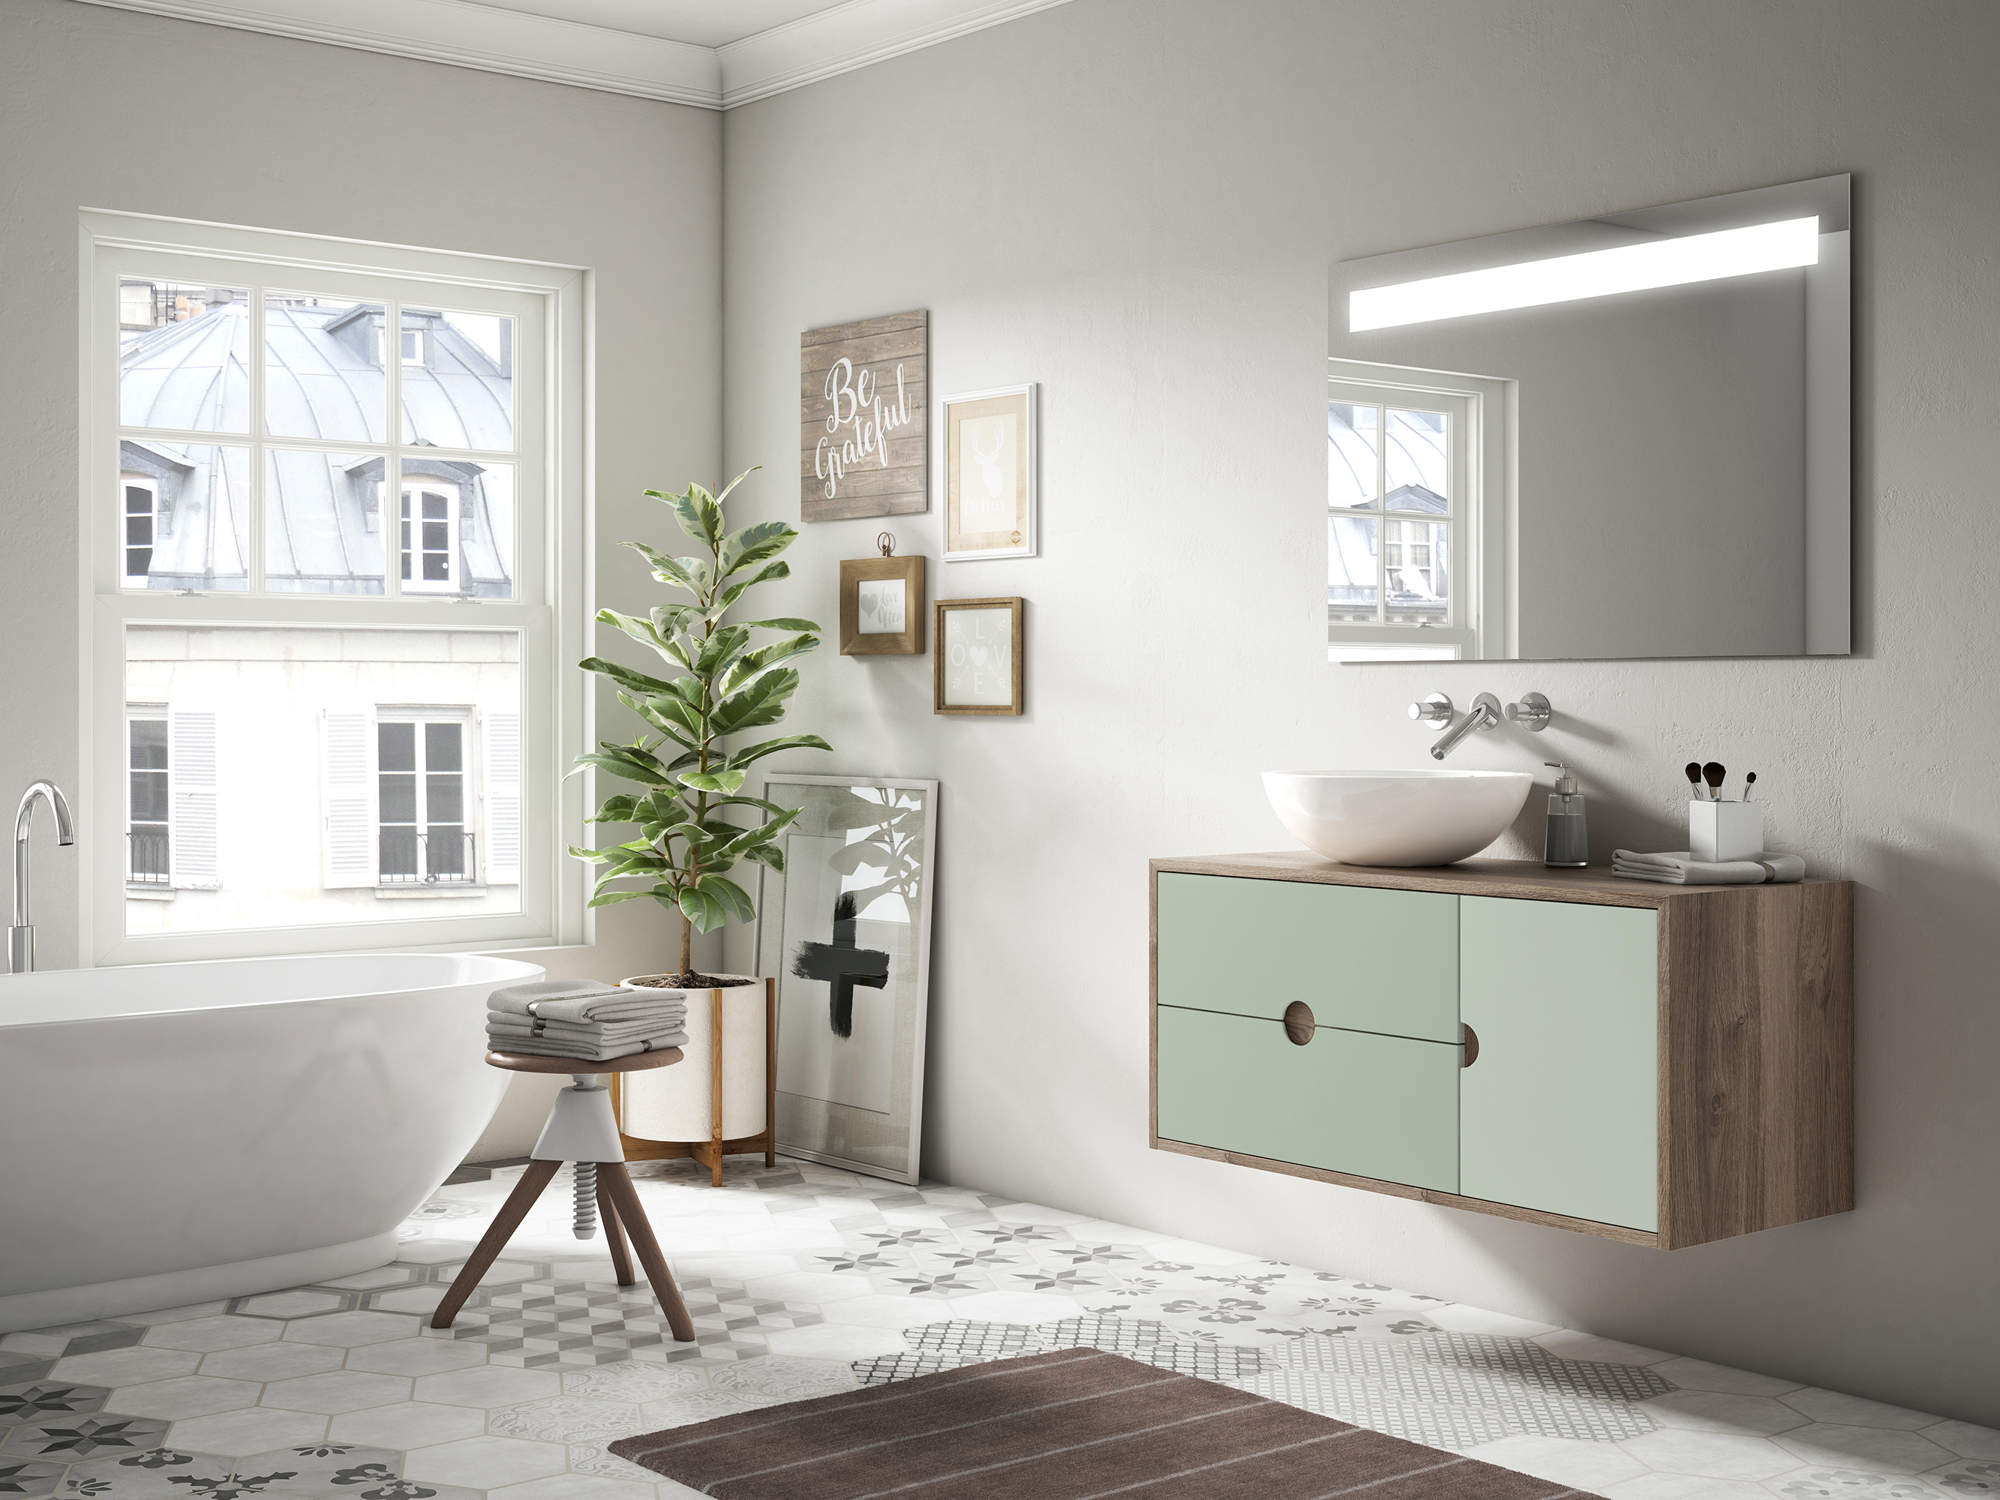 Muebles que combinan tonalidades verdes con madera de Leroy Merlin.